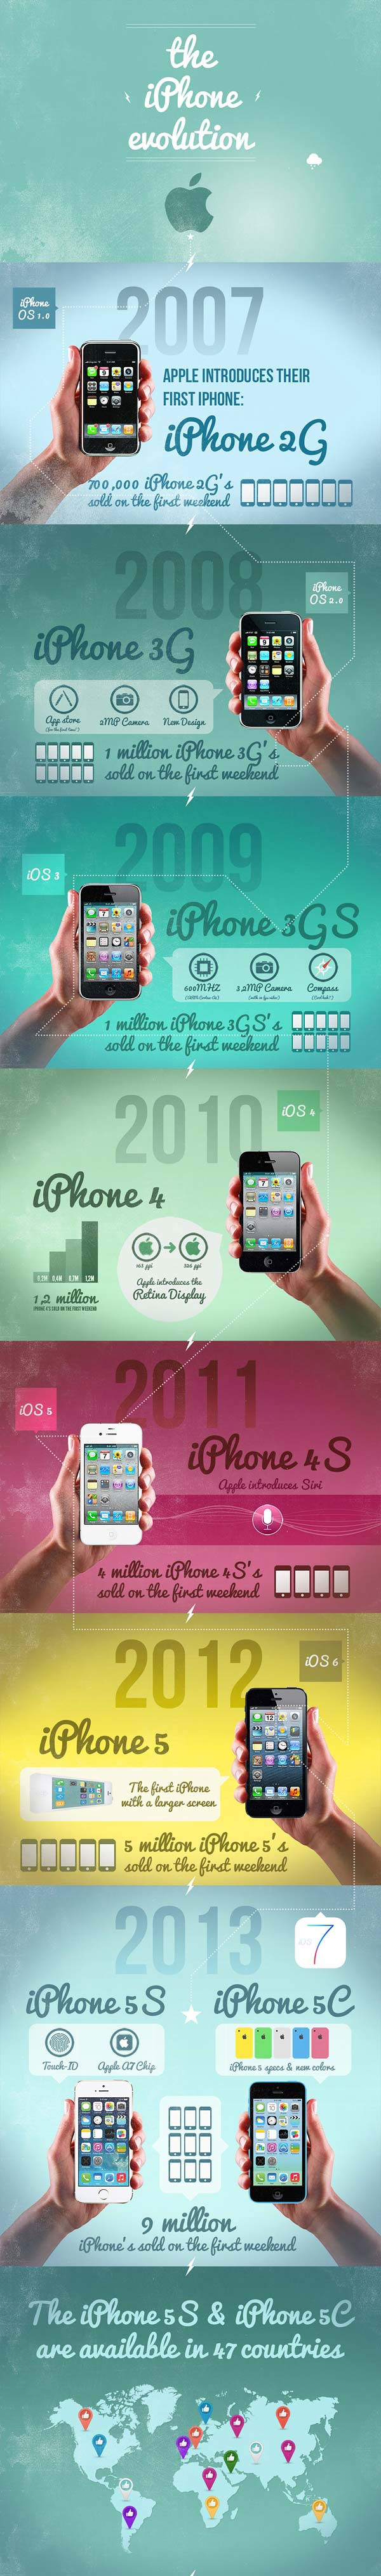 iphone evolution infographic